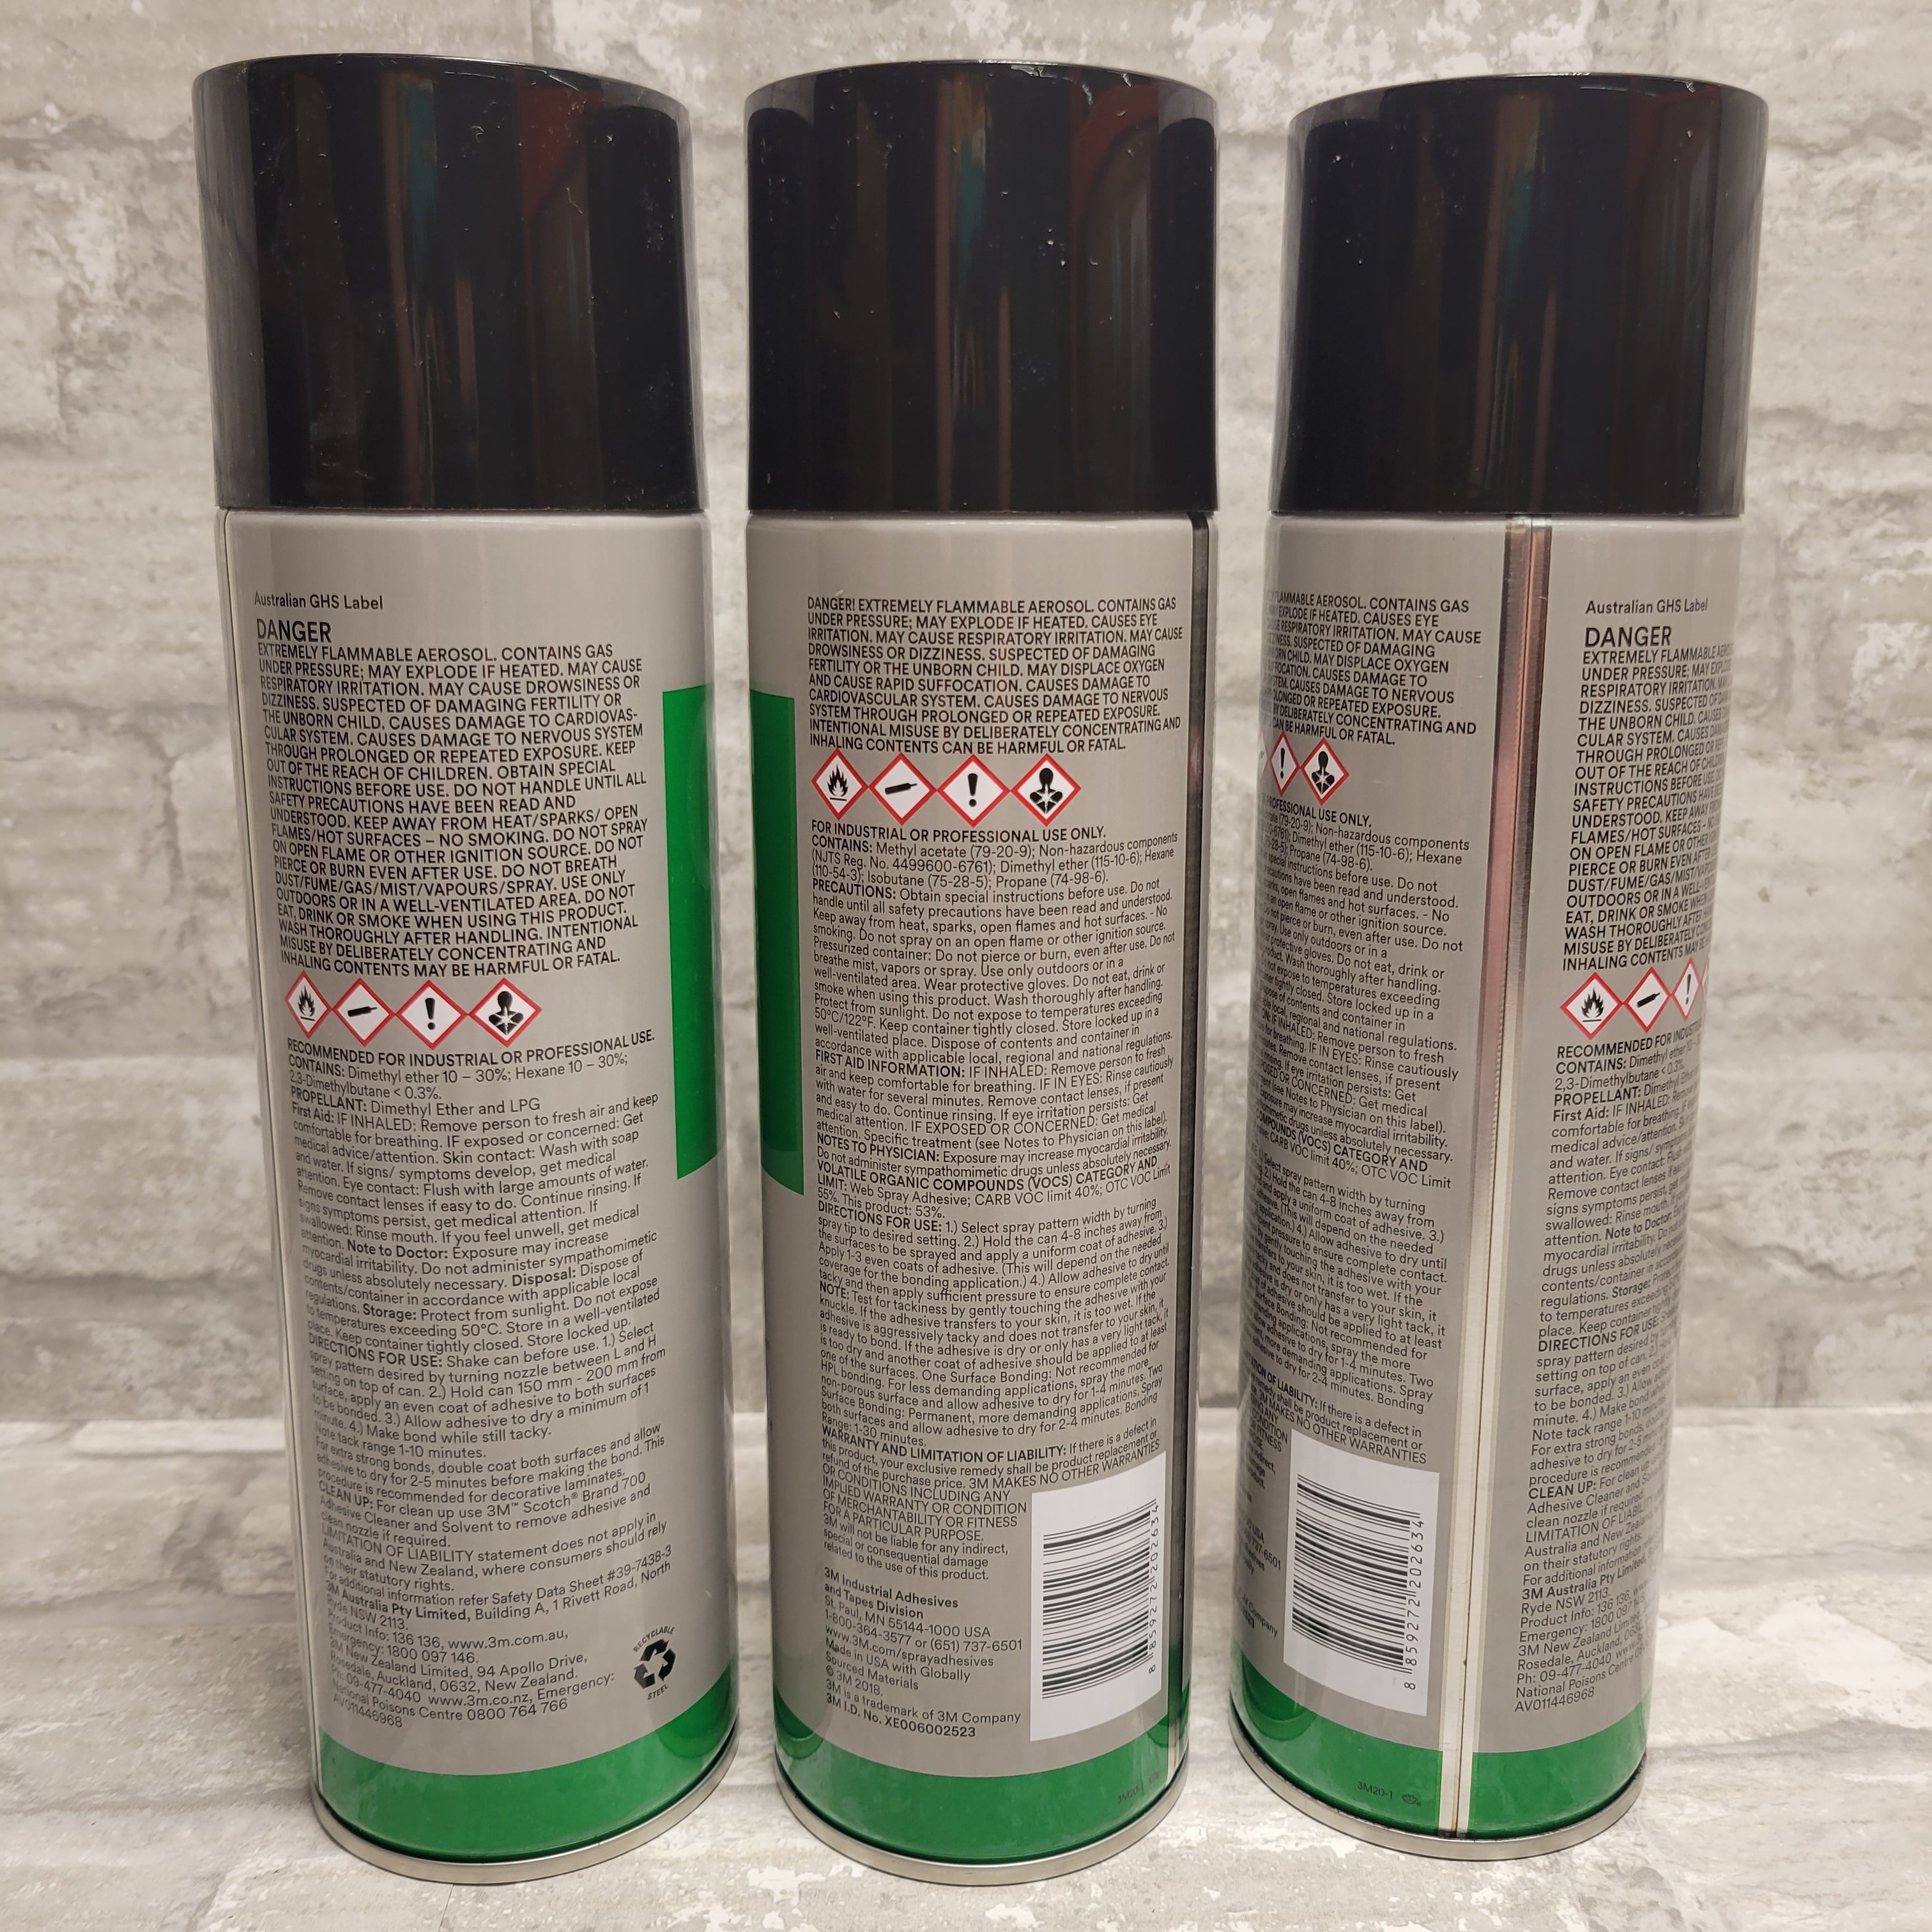 3M Heavy Duty 20 Spray Adhesive Clear, Net Weight 13.75 oz, 3 Pk (8150489694446)